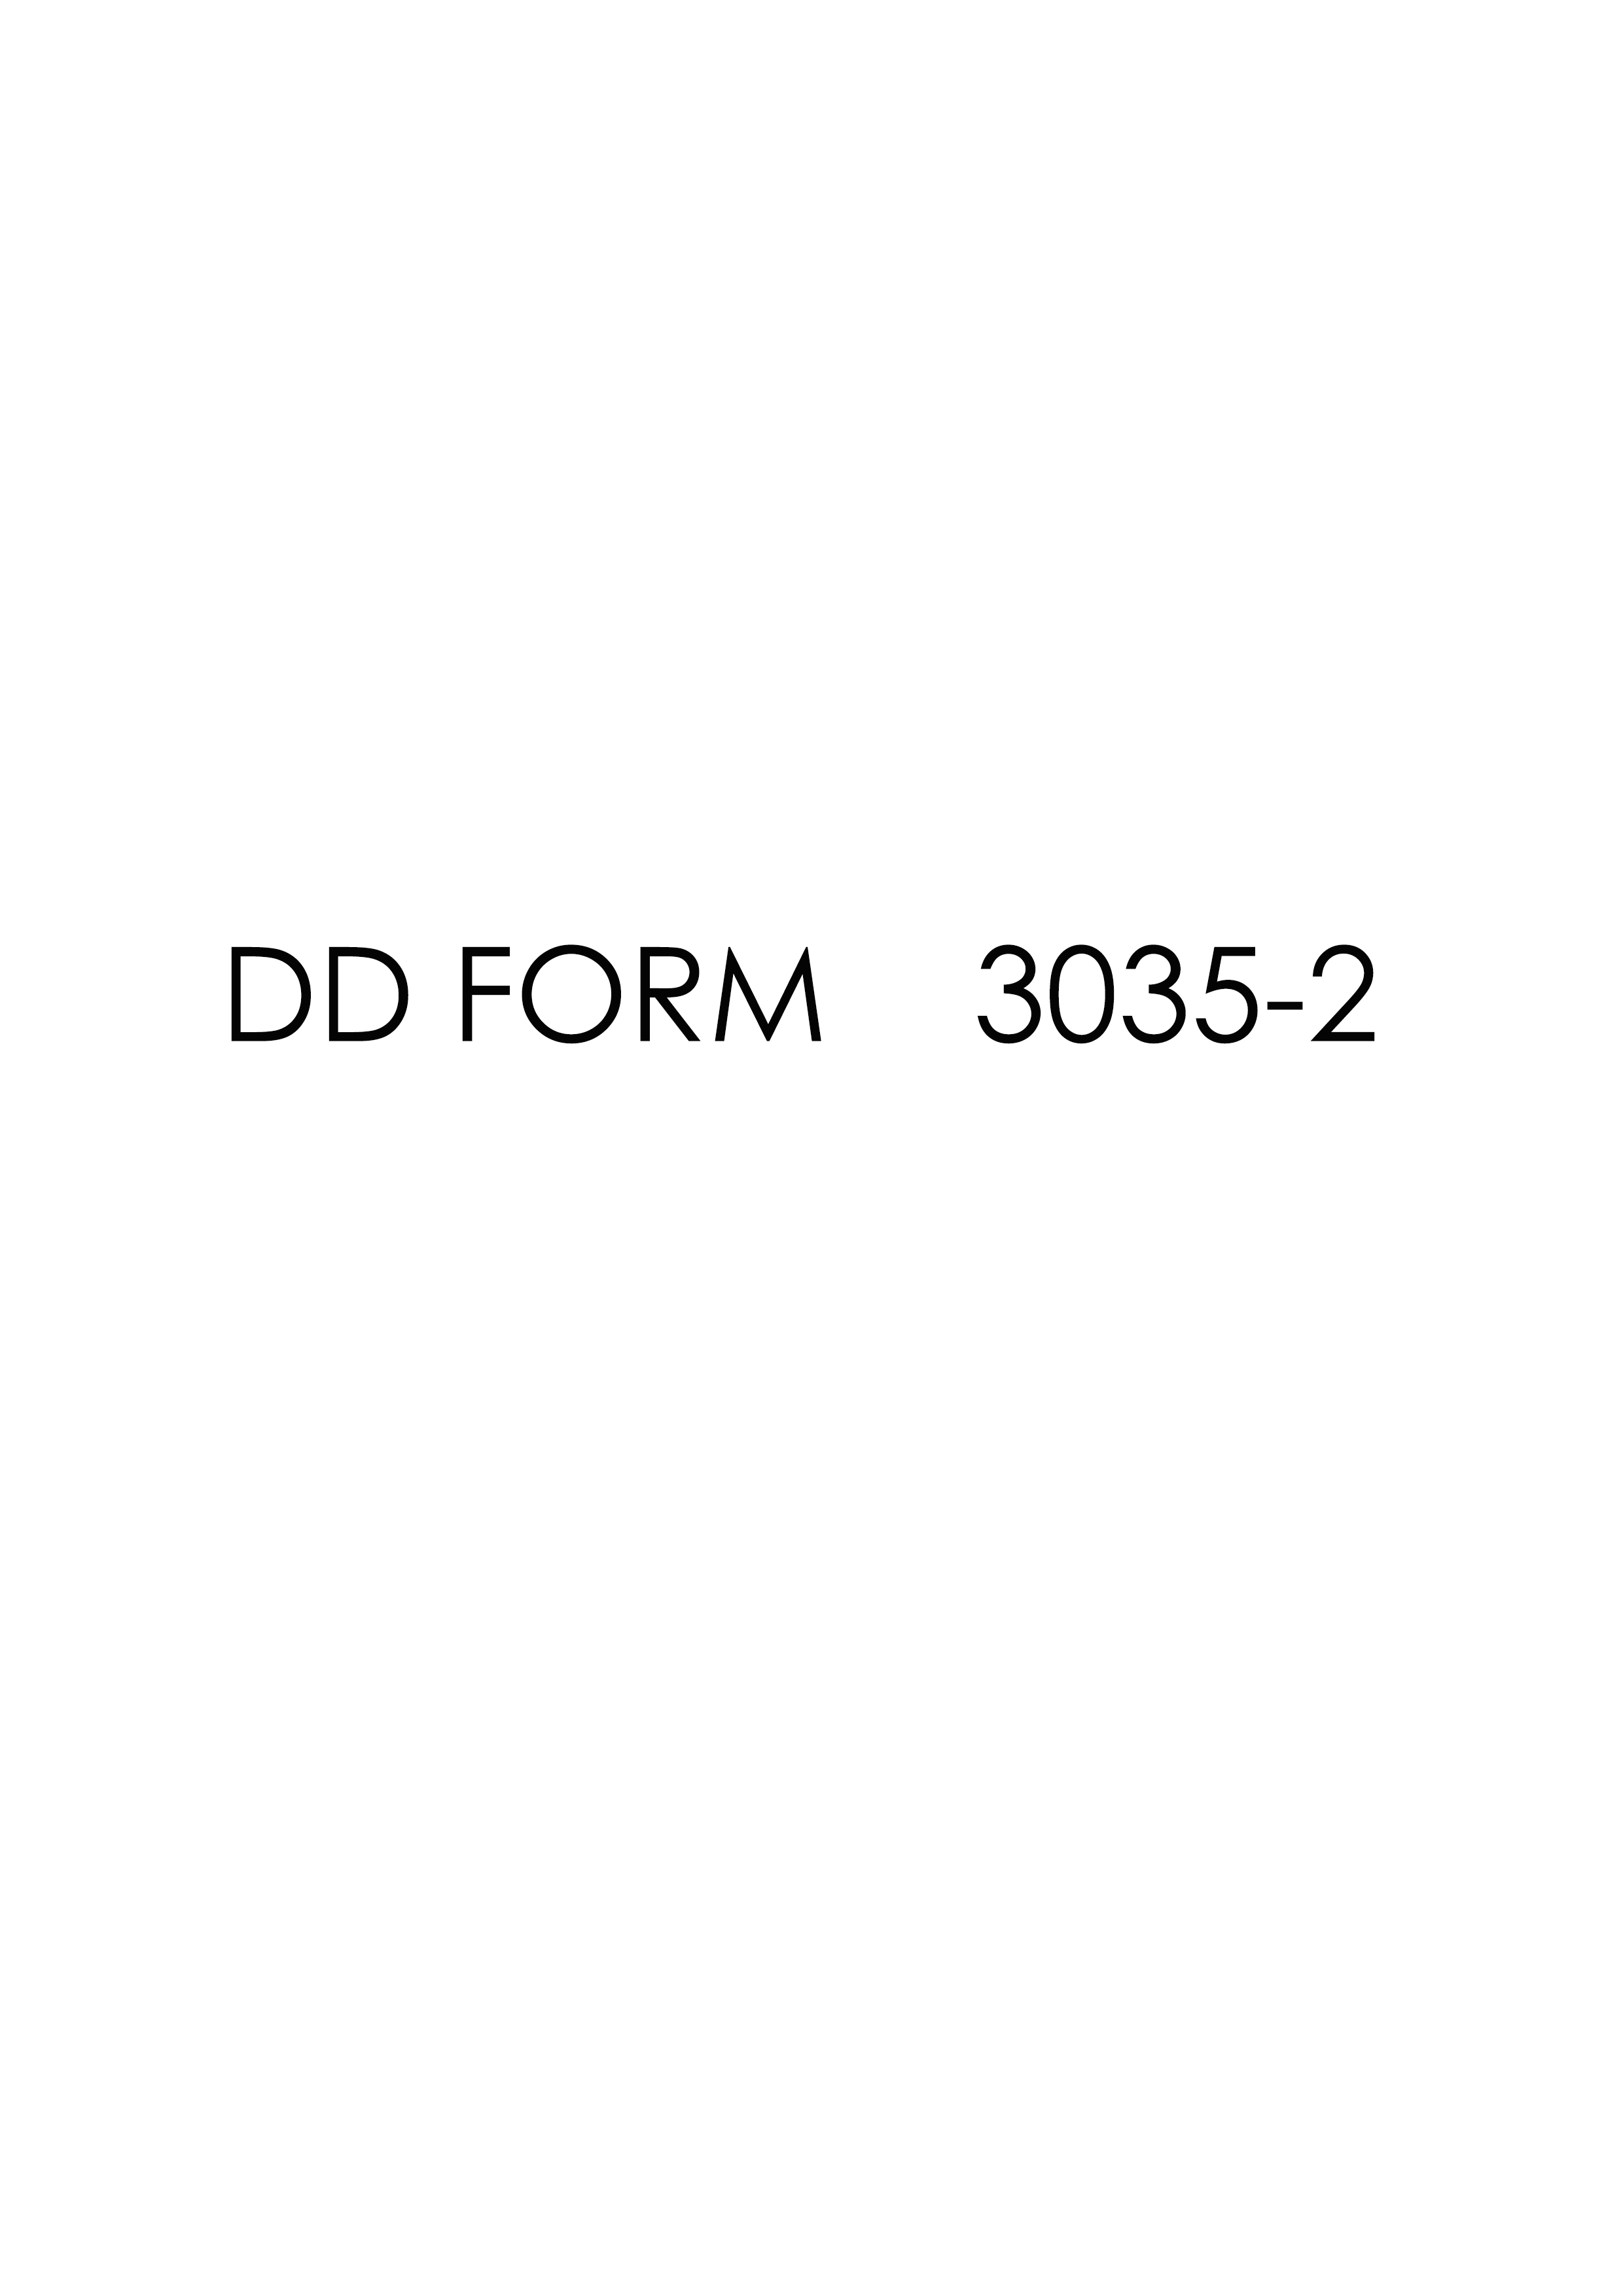 Download dd 3035-2 Form